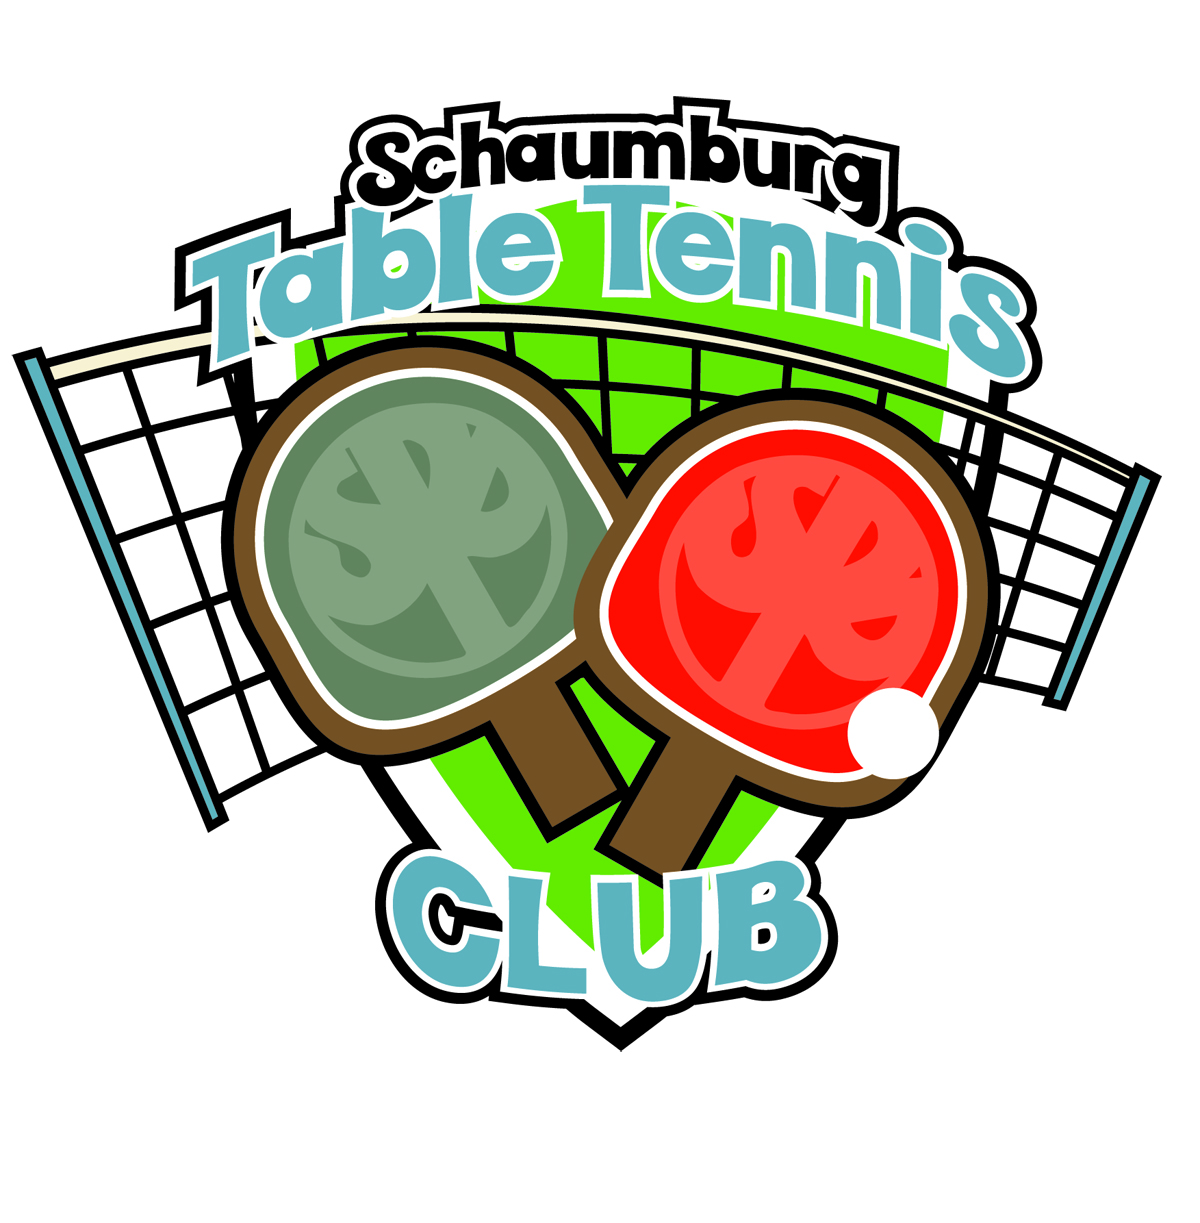 Schaumburg Table tennis club logo